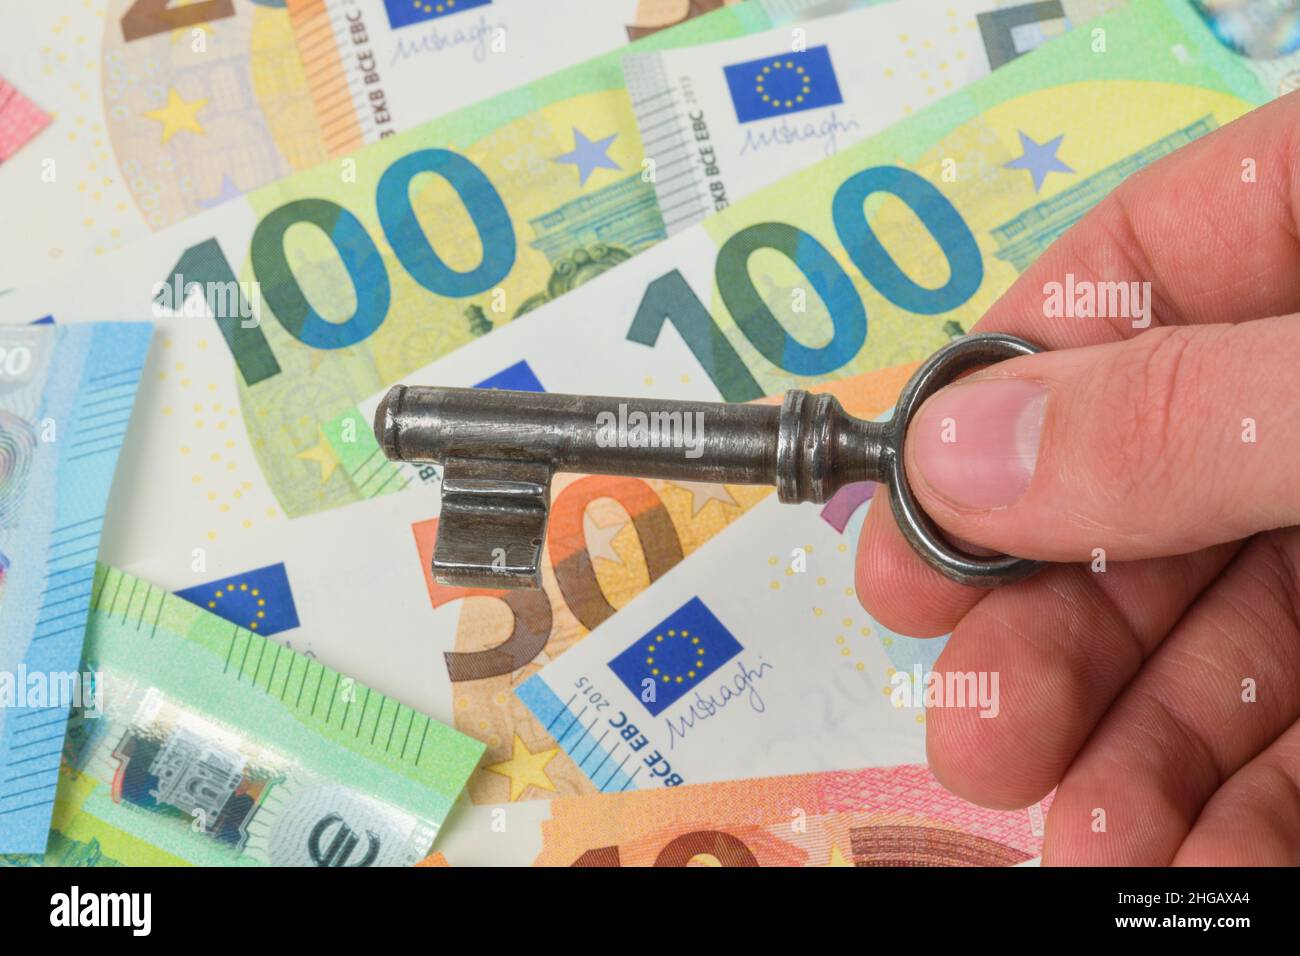 Money, euros, banknotes, notes, keys, symbol photo real estate purchase, studio shot Stock Photo